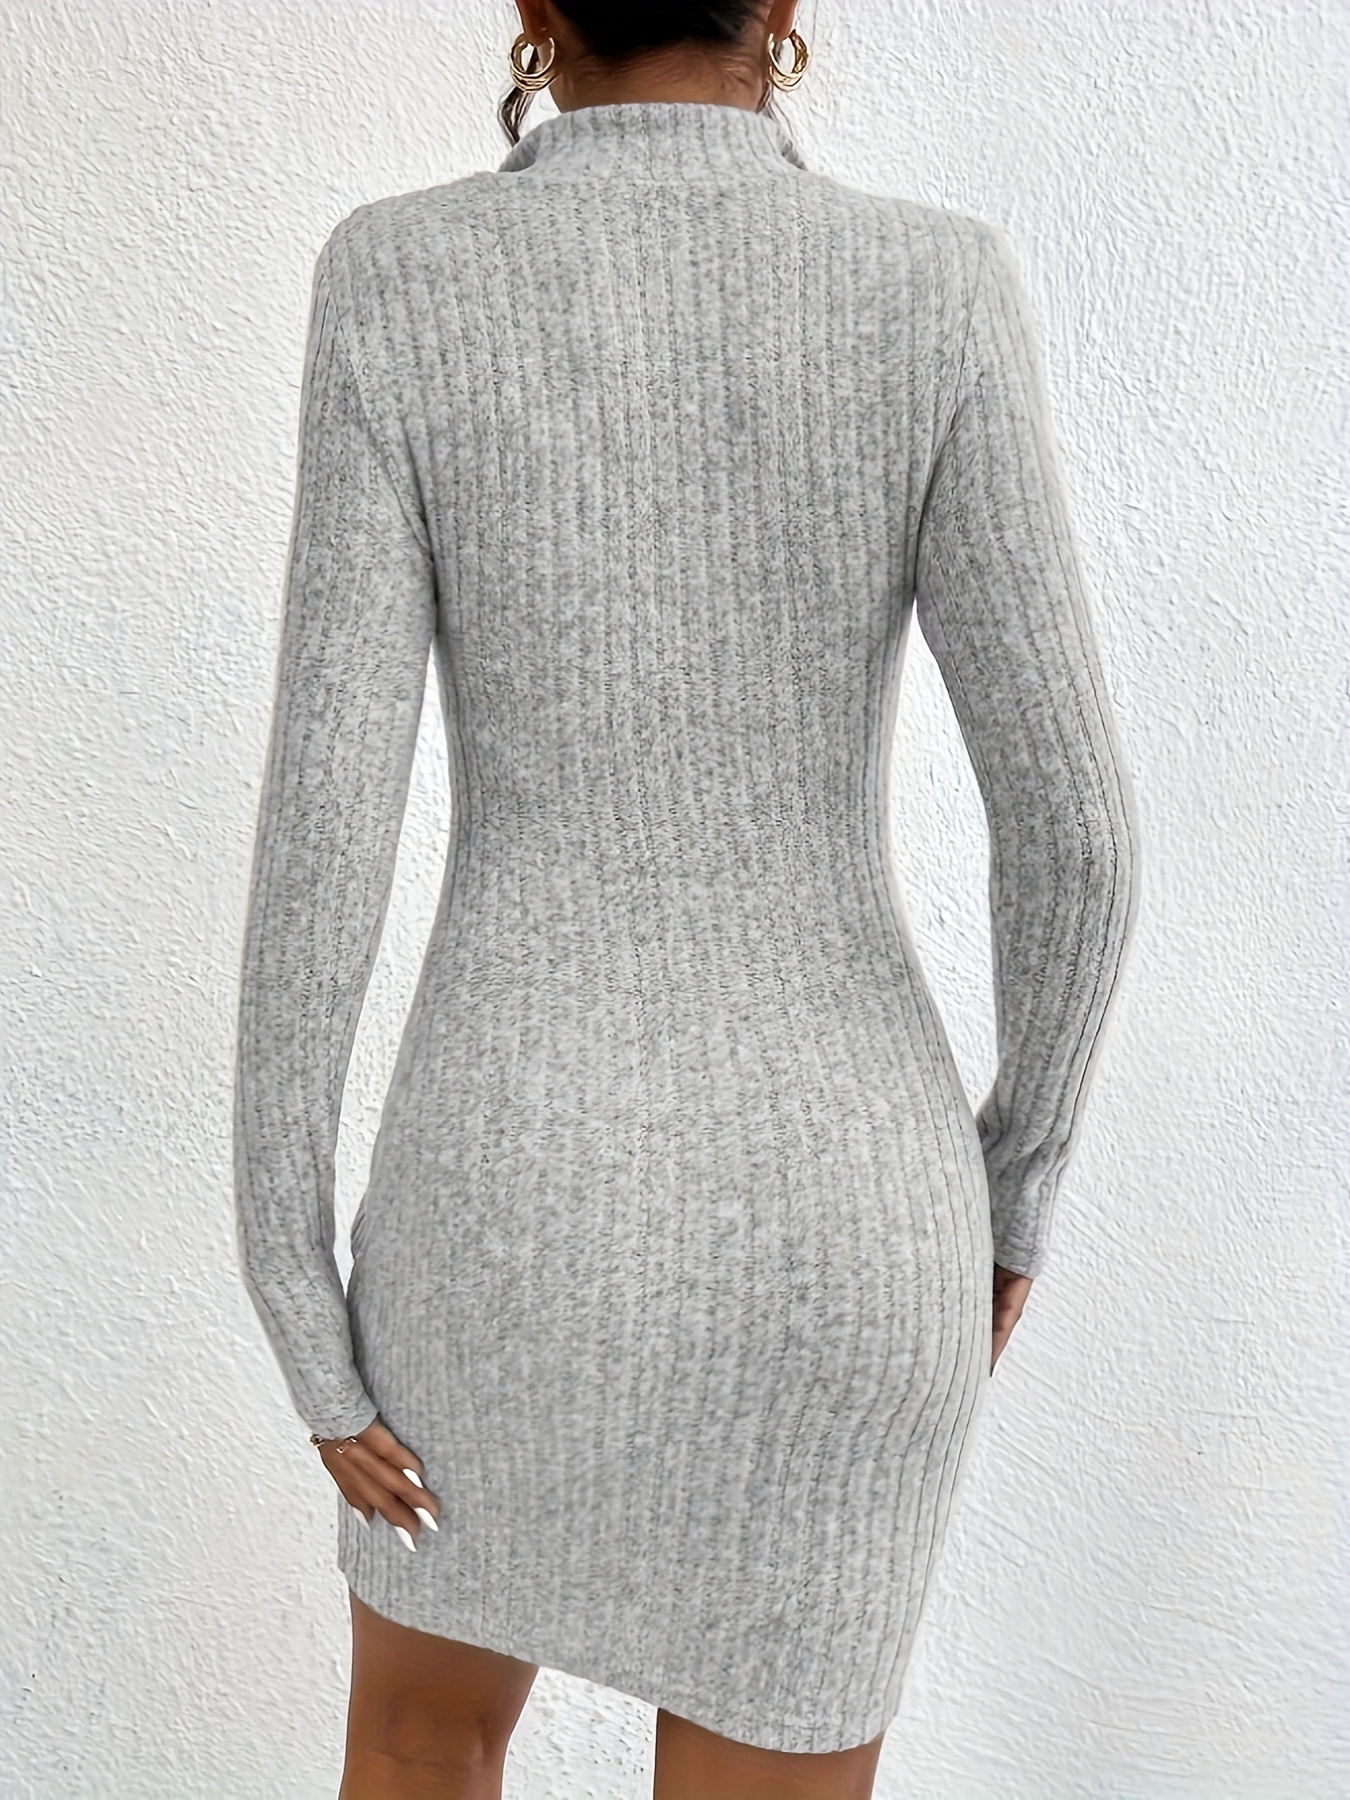 half zip solid bodycon dress, casual long sleeve mini dress, women's clothing grey 1